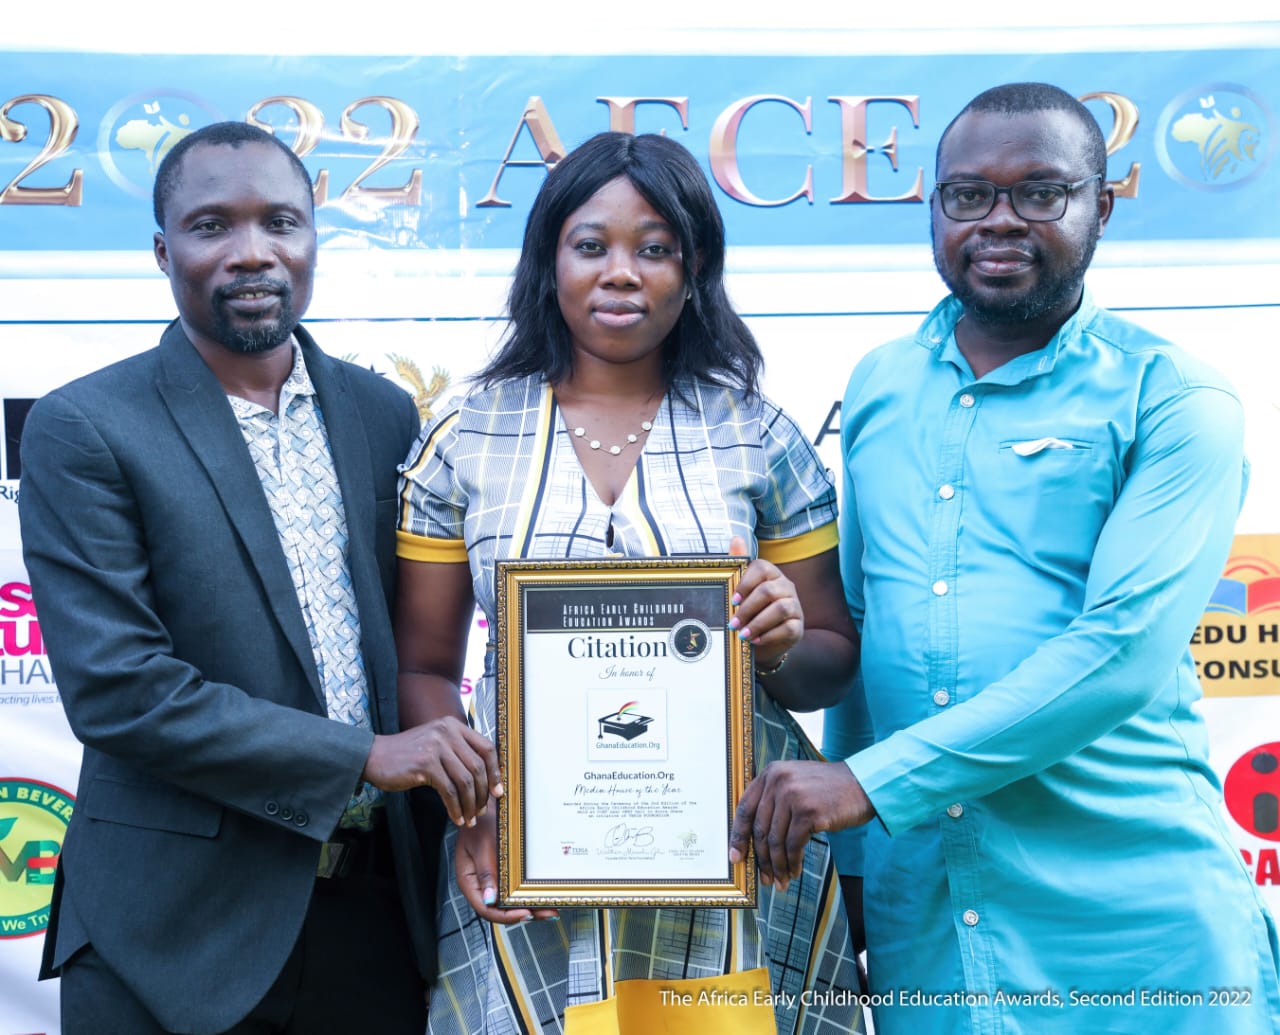 AECE Awards 2022 GhanaEducation.Org adjudged media house of the year